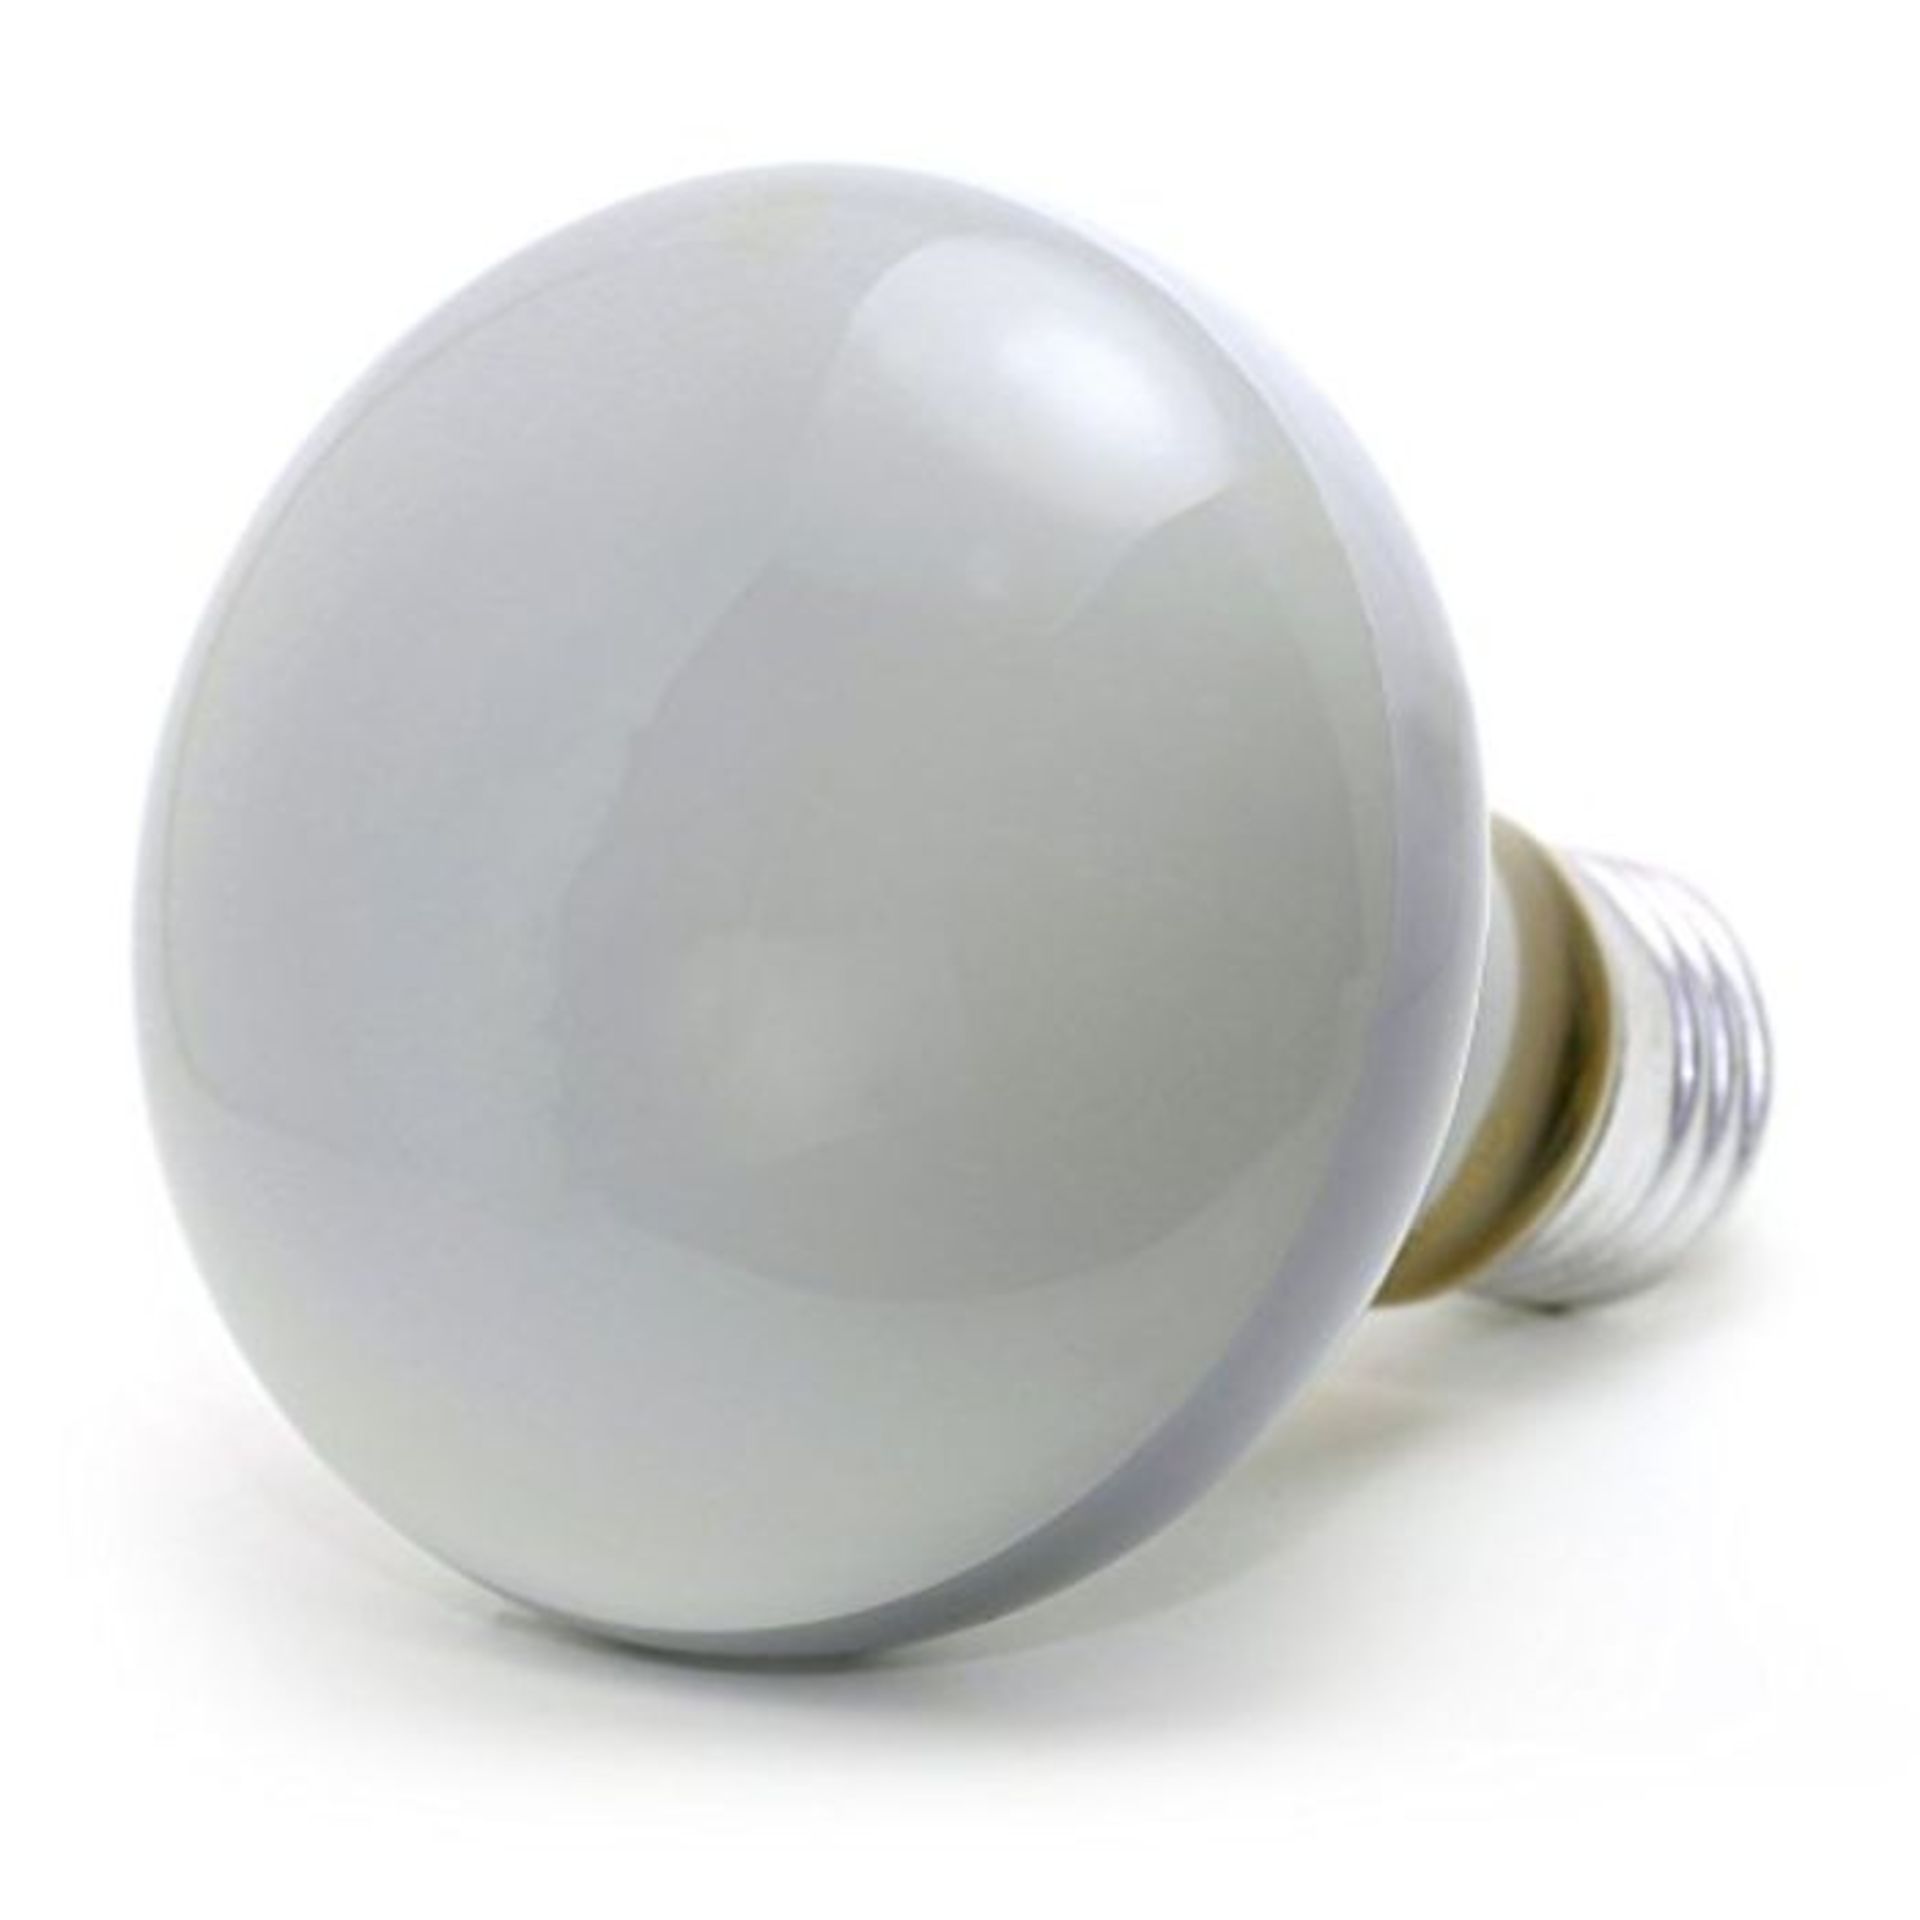 5 x R80 Reflector Bulbs (Spot Light) 60 Watt Edison Screw E27 Cap Diffused 220 - 240 V